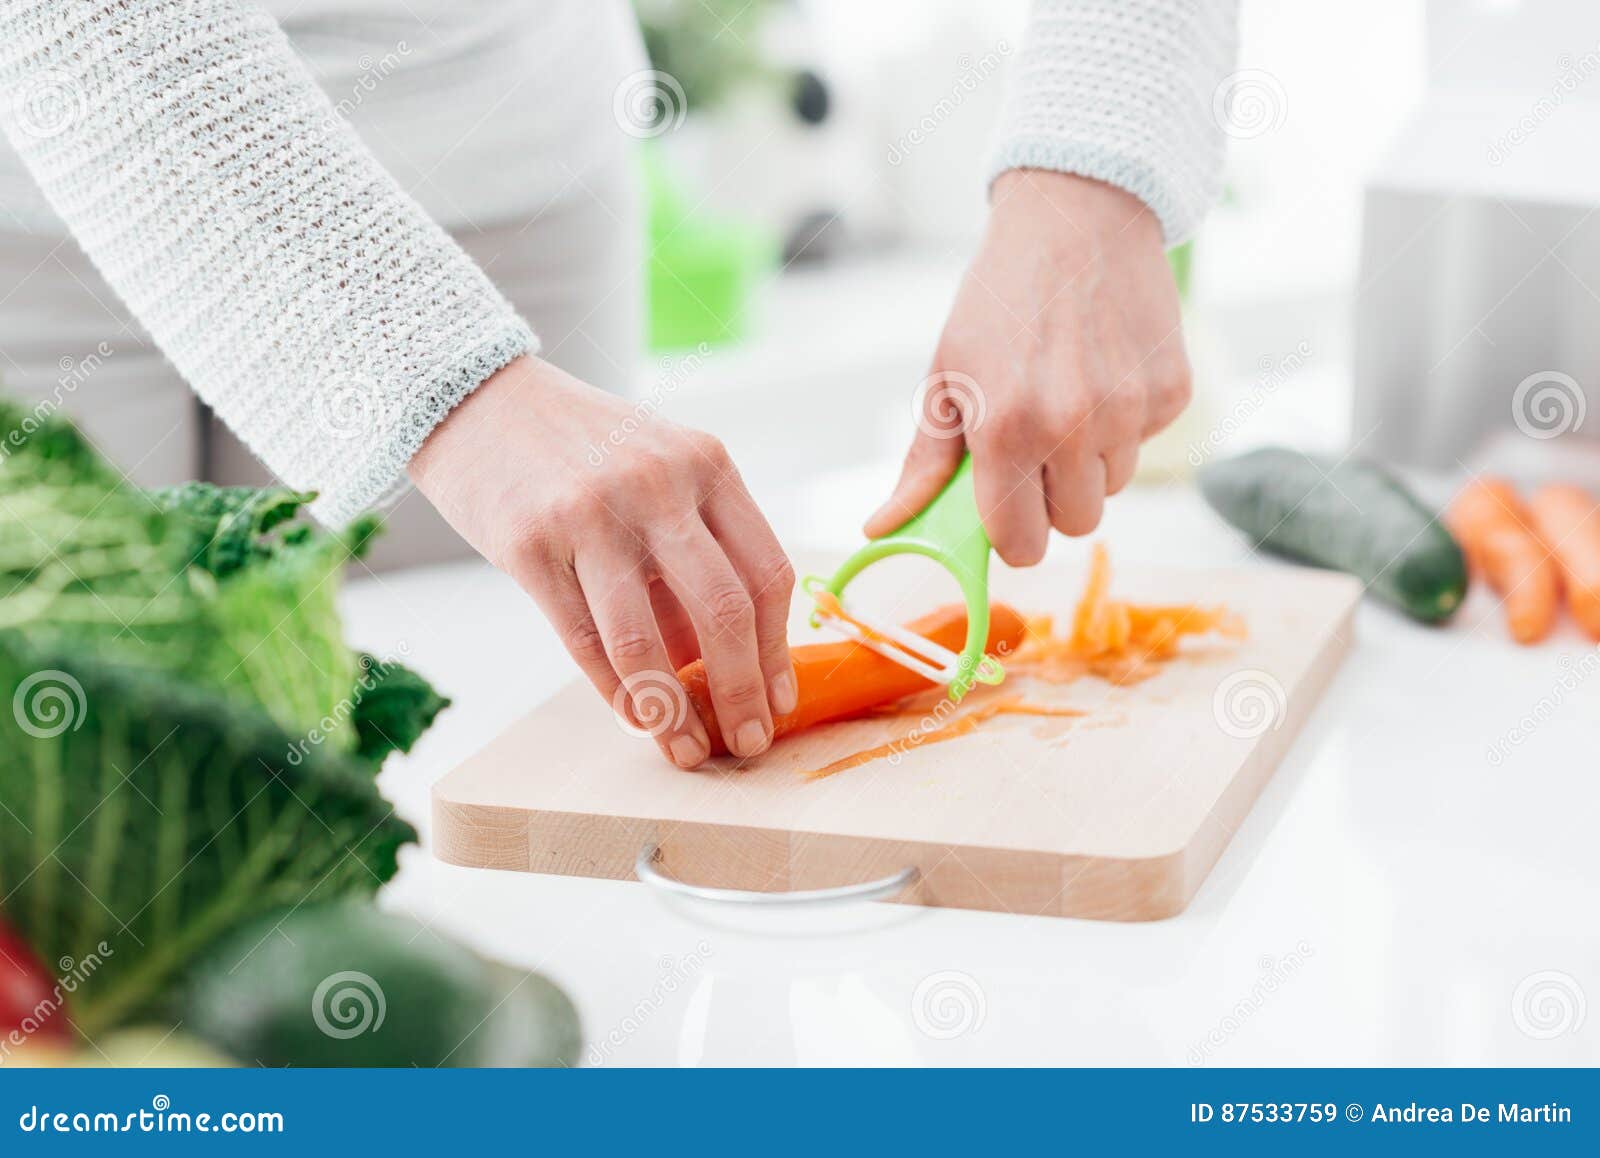 Woman preparing carrots stock image. Image of carrots - 87533759